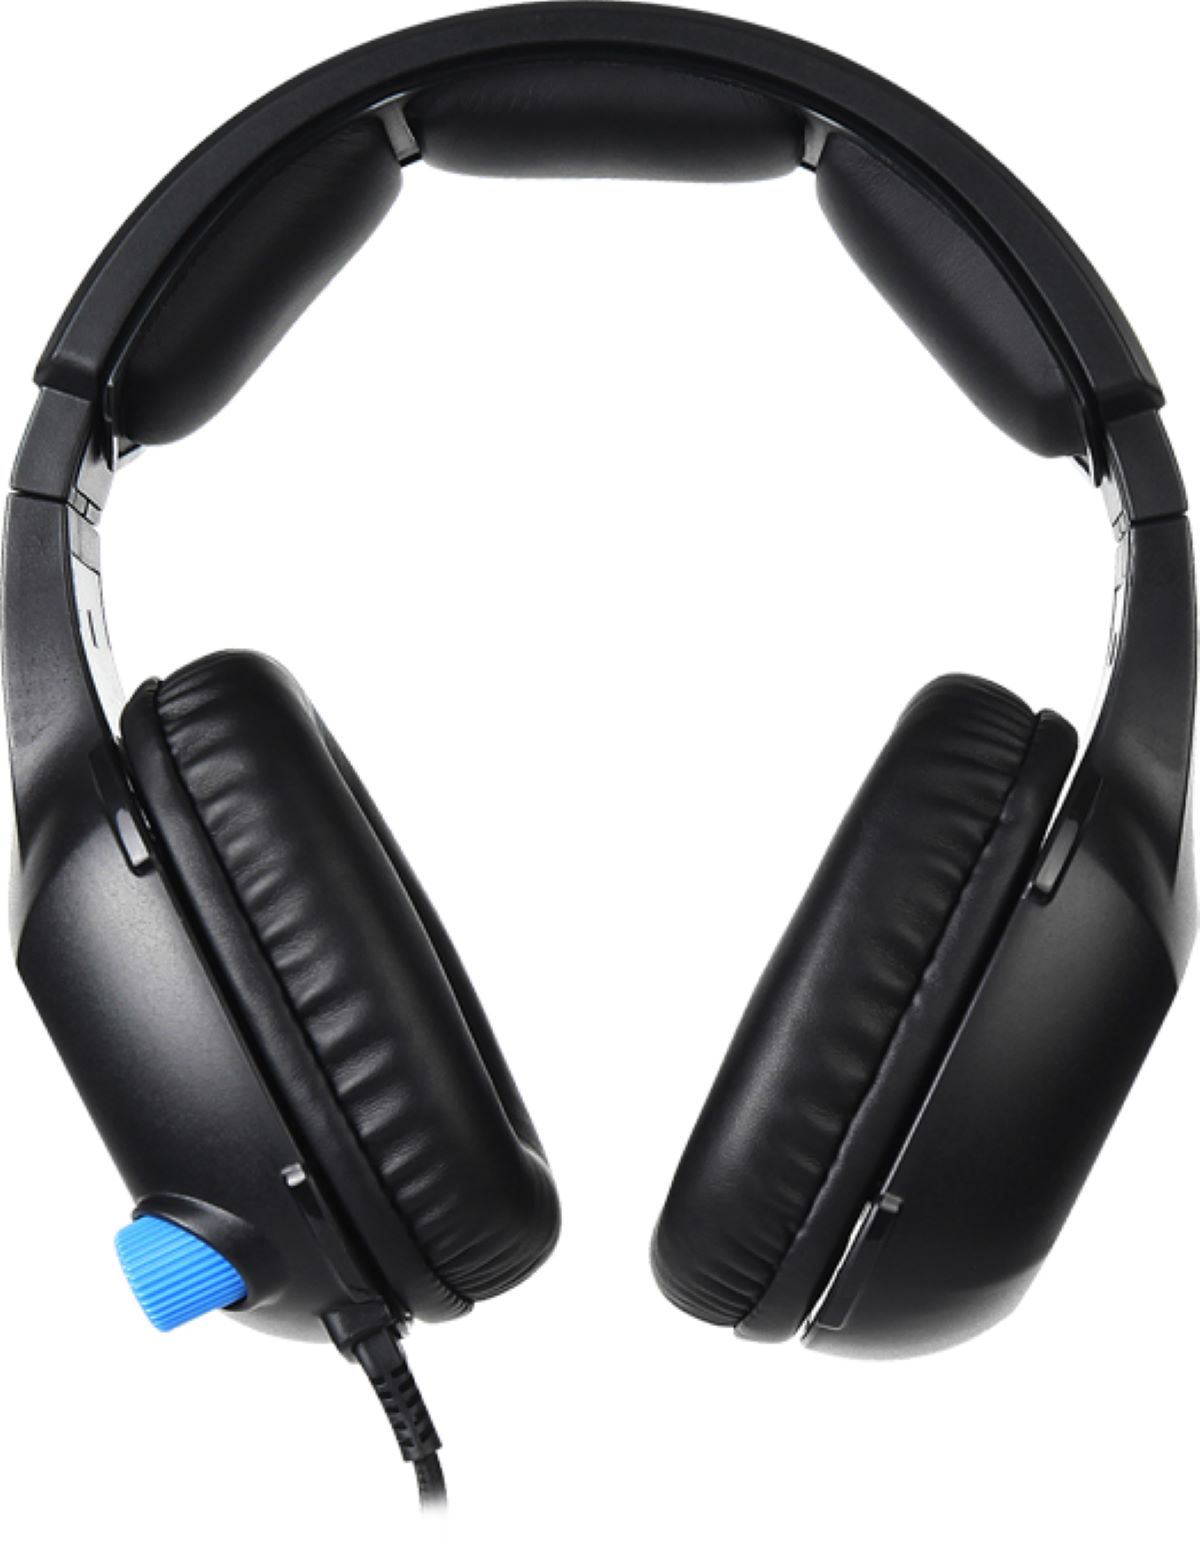 Headset Gaming Dazzle SA-905, schwarz/blau SADES Over-ear